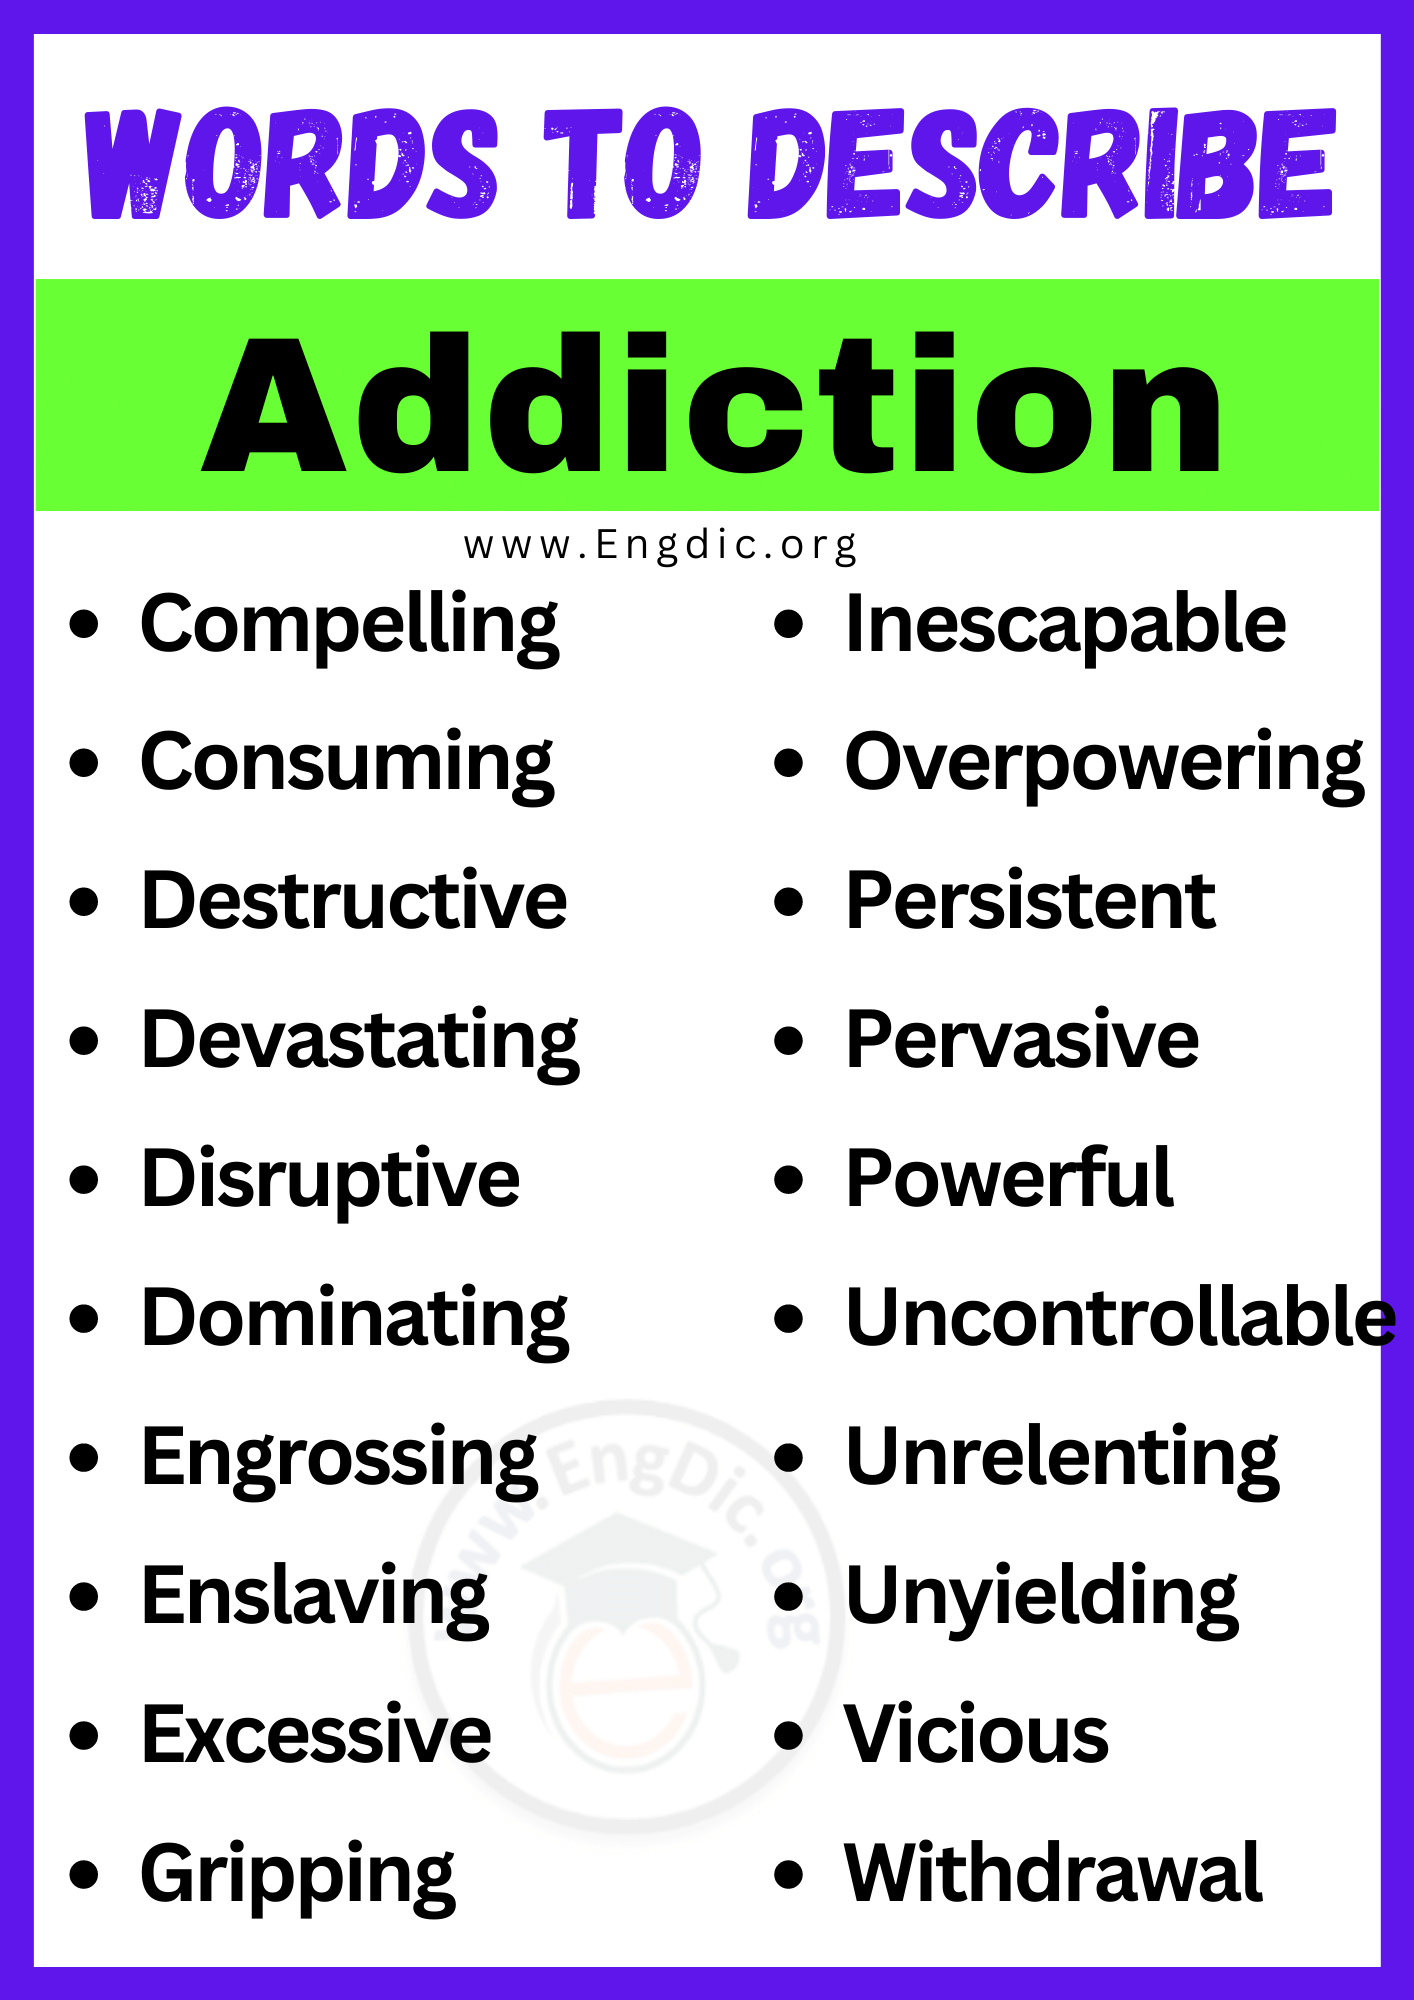 Words to Describe Addiction